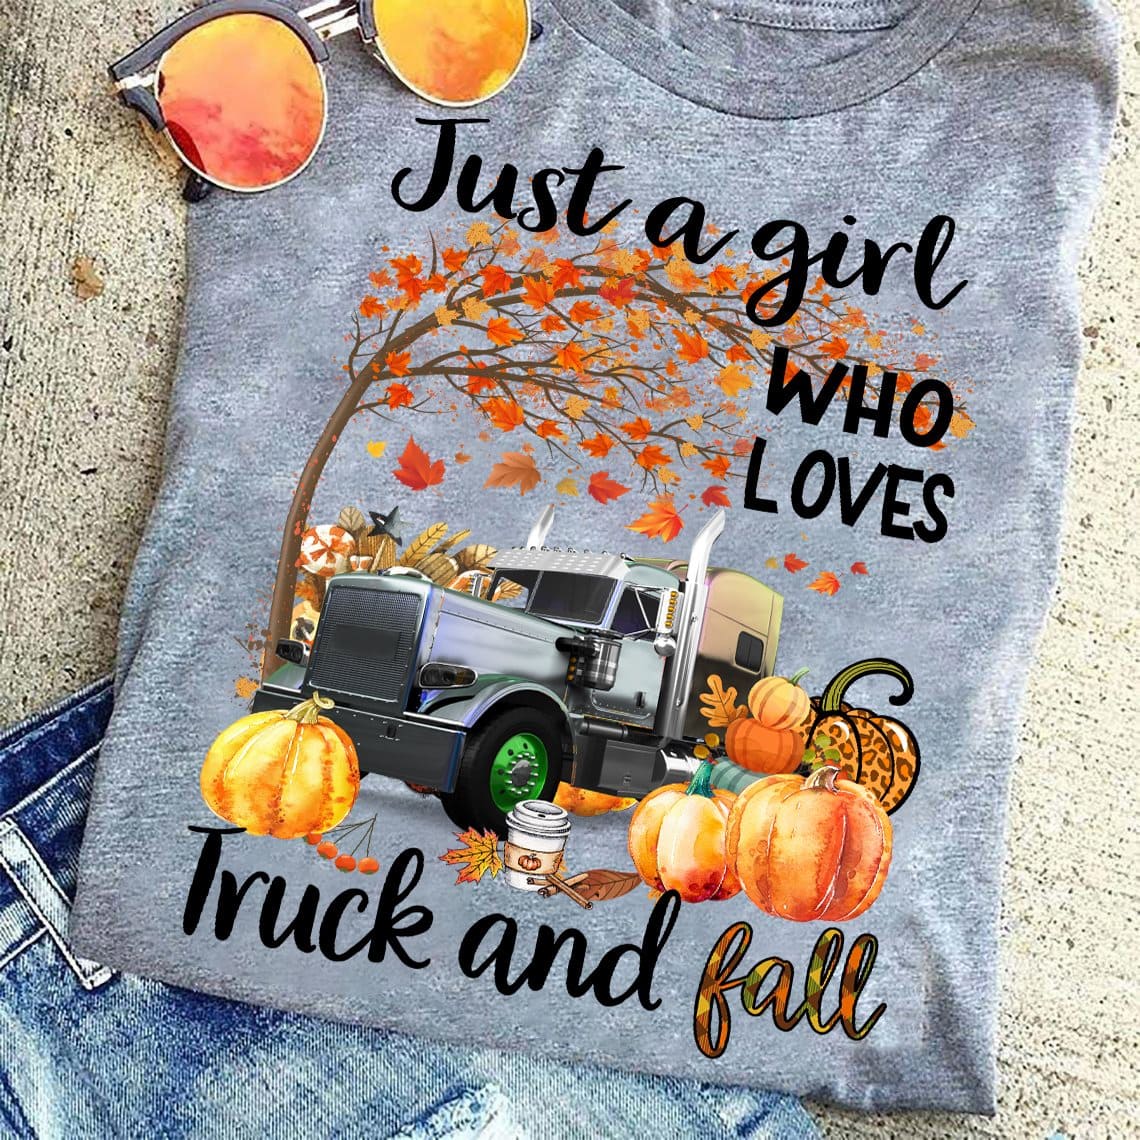 Just a girl who loves truck and fall - Girl loves trucker, fall wonderfull season, truck driver gift